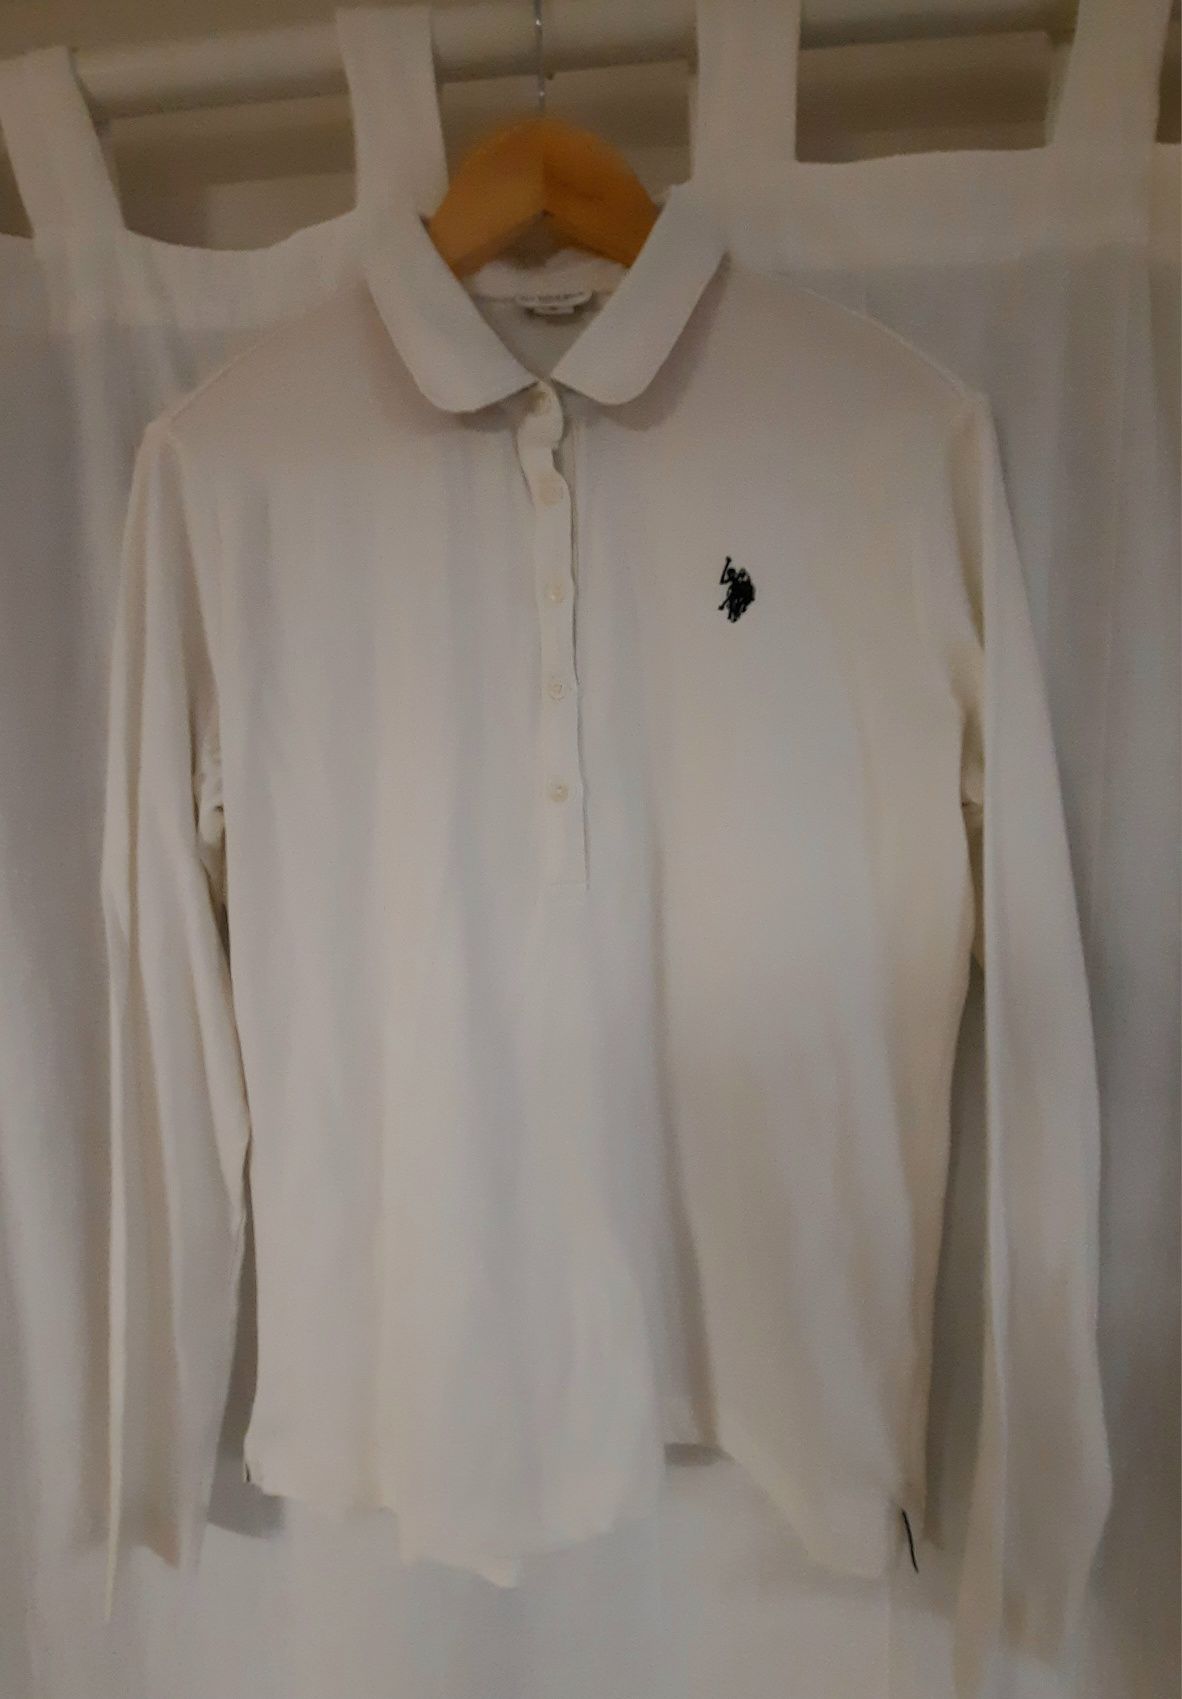 Дамска блуза U.S. Polo Assn., XL размер
XL размер
Уникален модел на бр